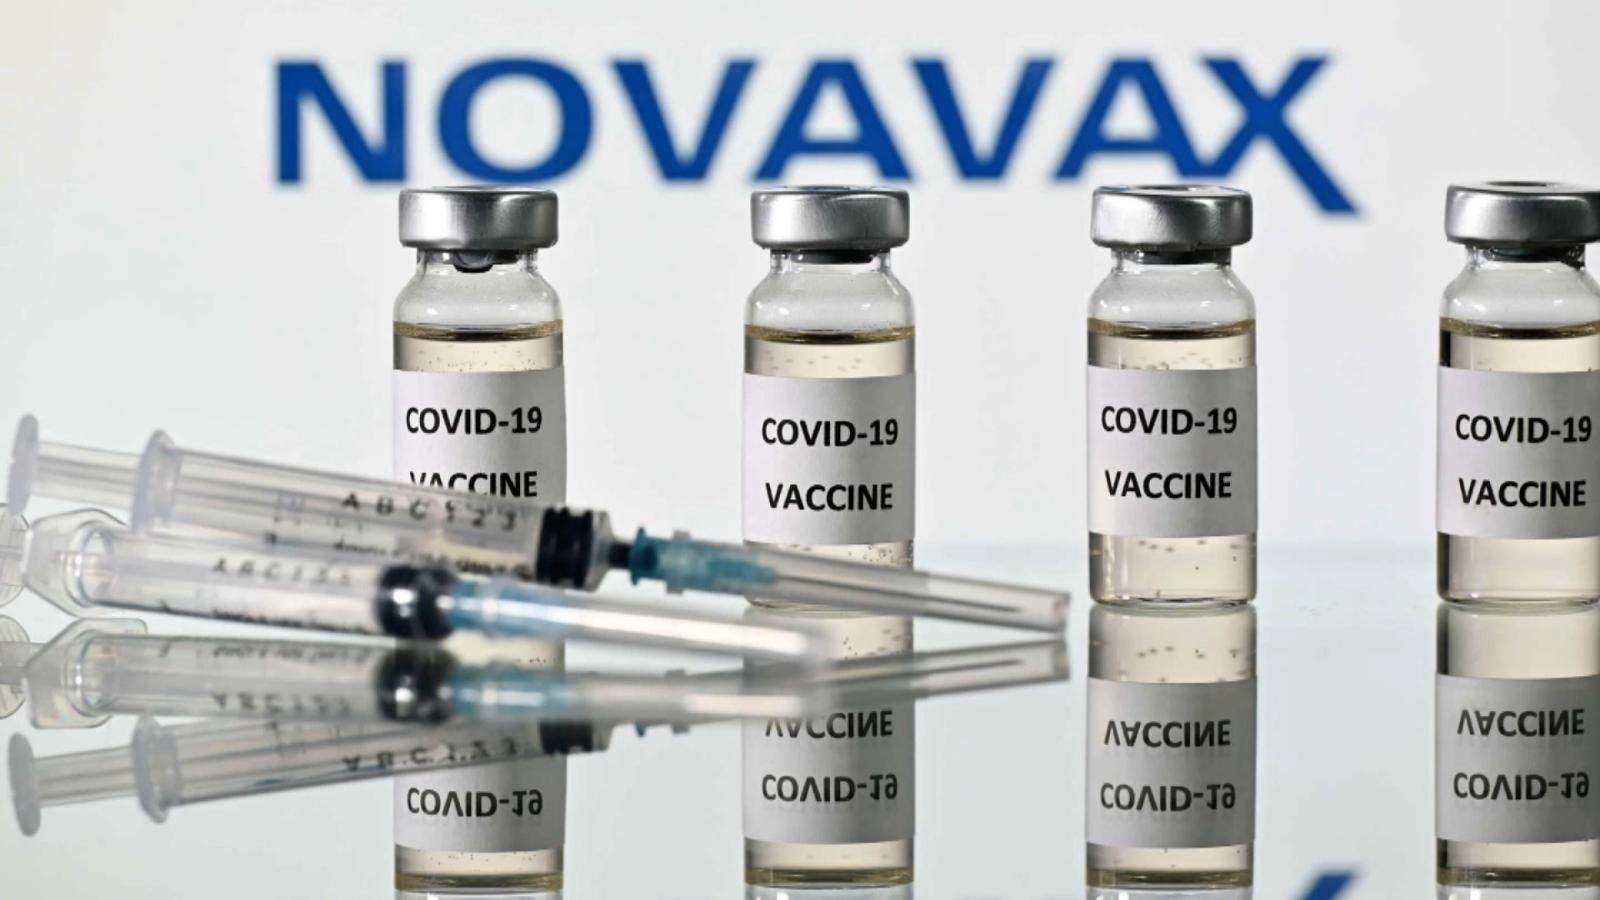 FDA advisors will evaluate the risks and benefits of Novavax’s covid-19 vaccine